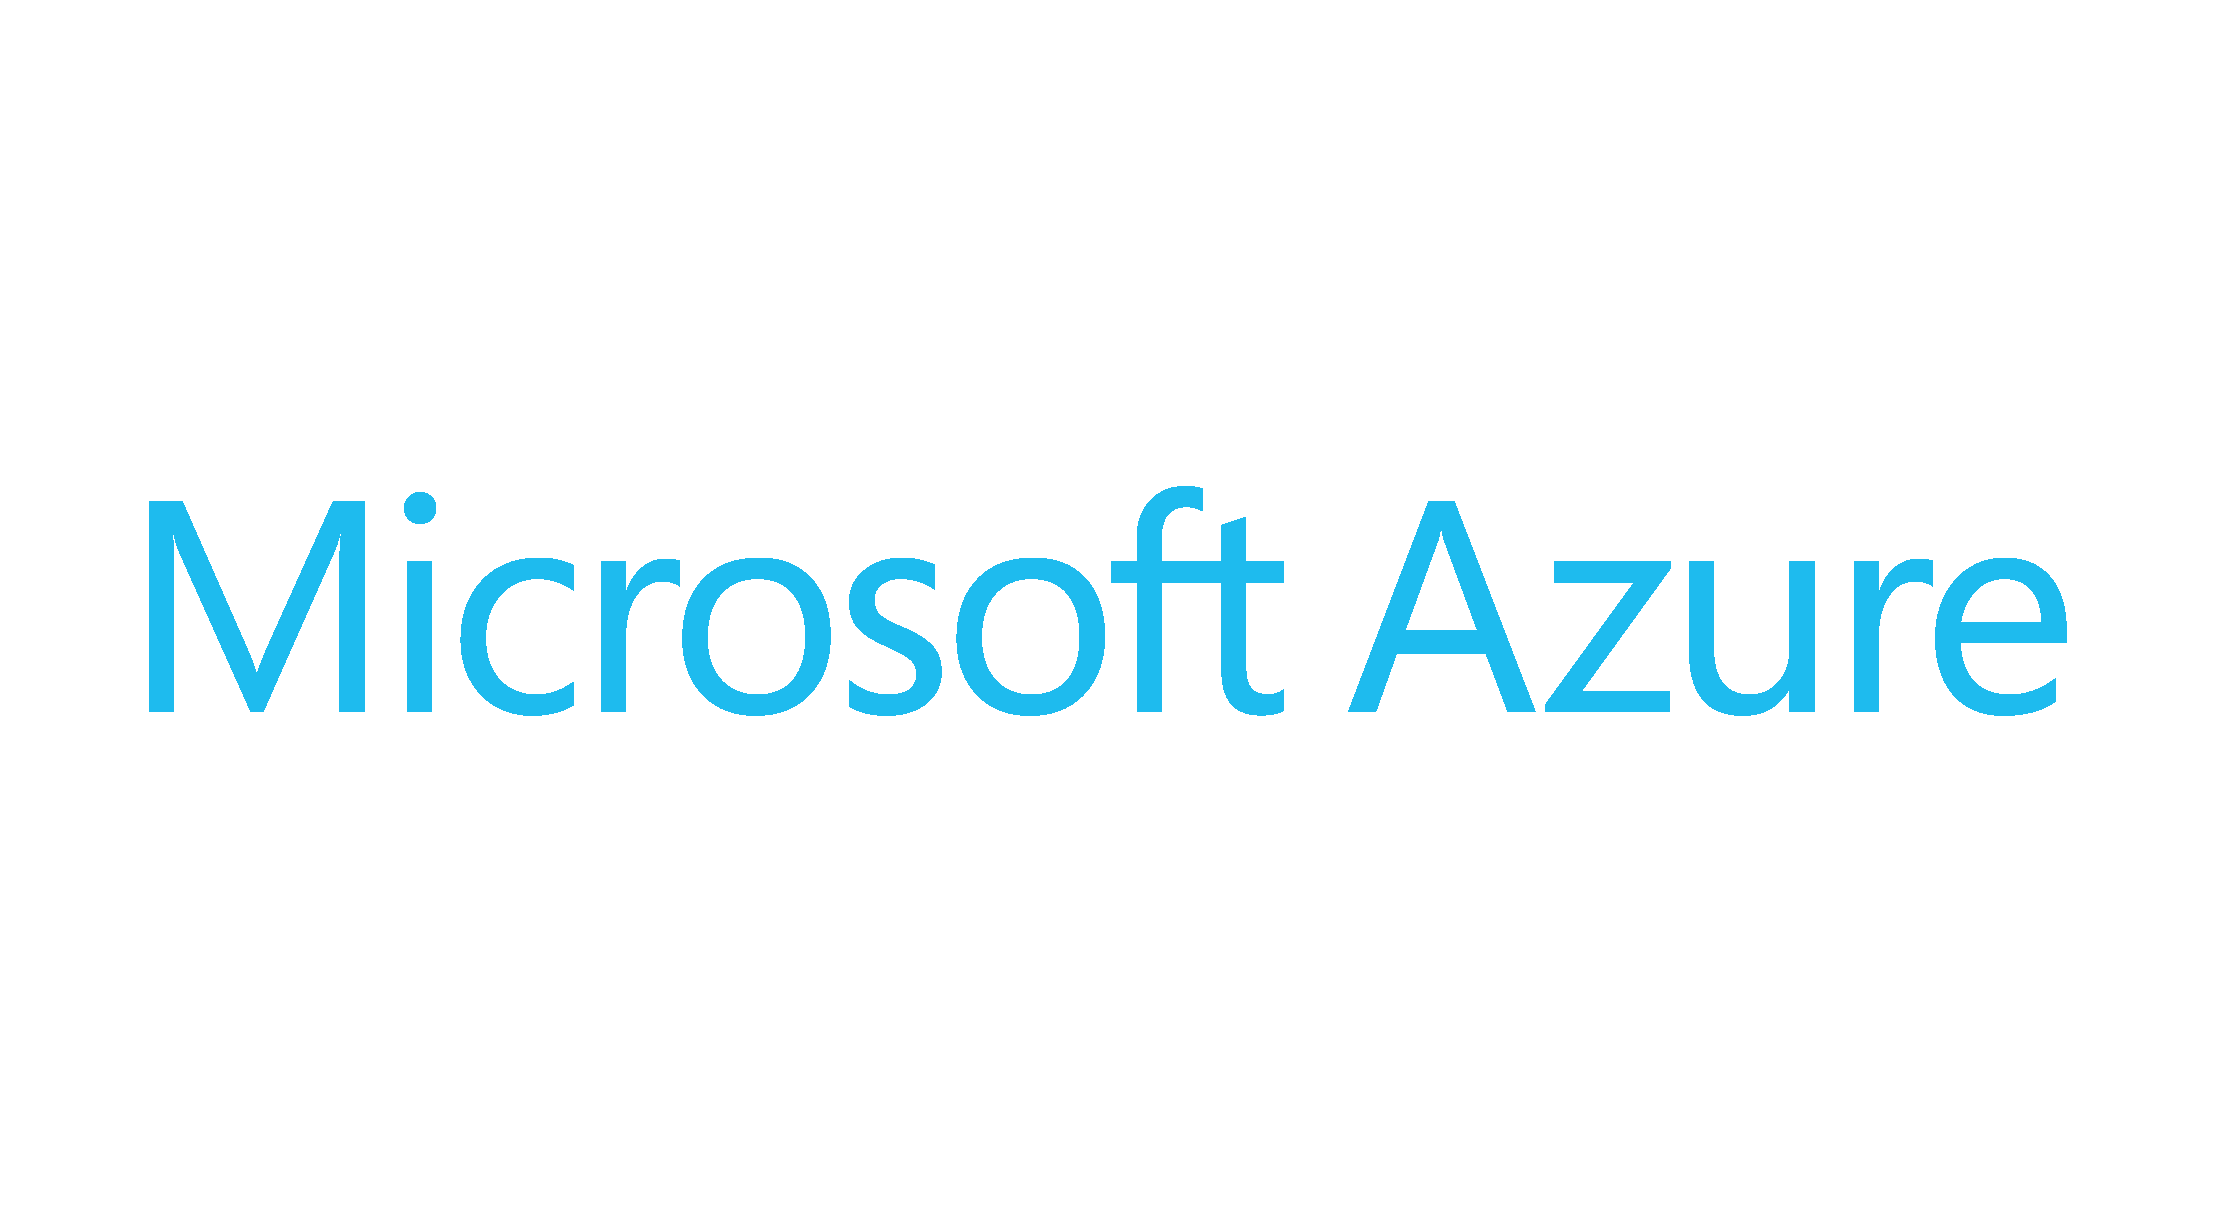 Microsoft Azure Logo - Microsoft azure Logos